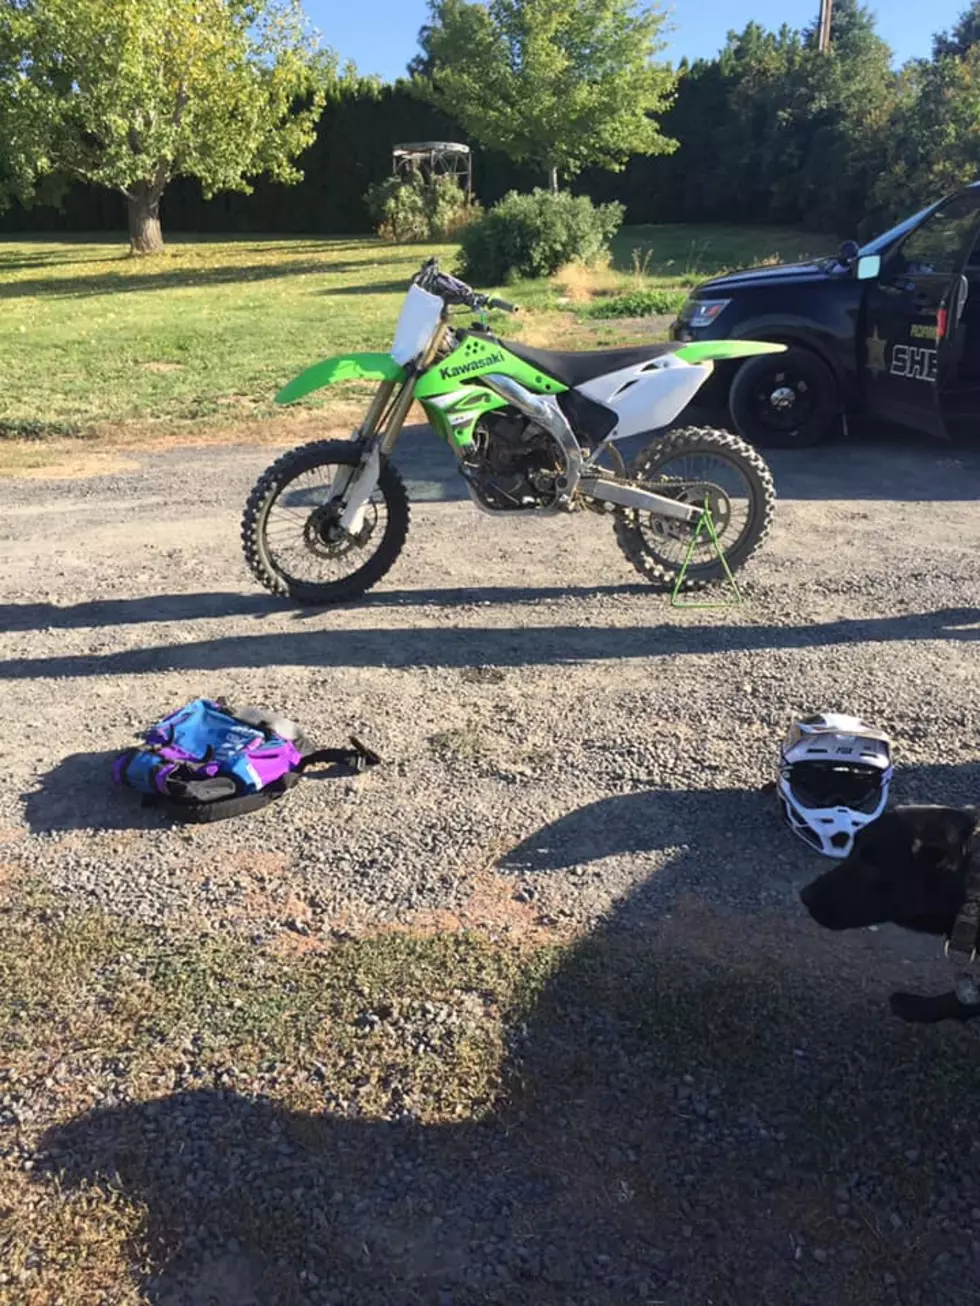 Knucklehead Motorcyclist Apprehended By Off-Duty Sheriff's Deputy